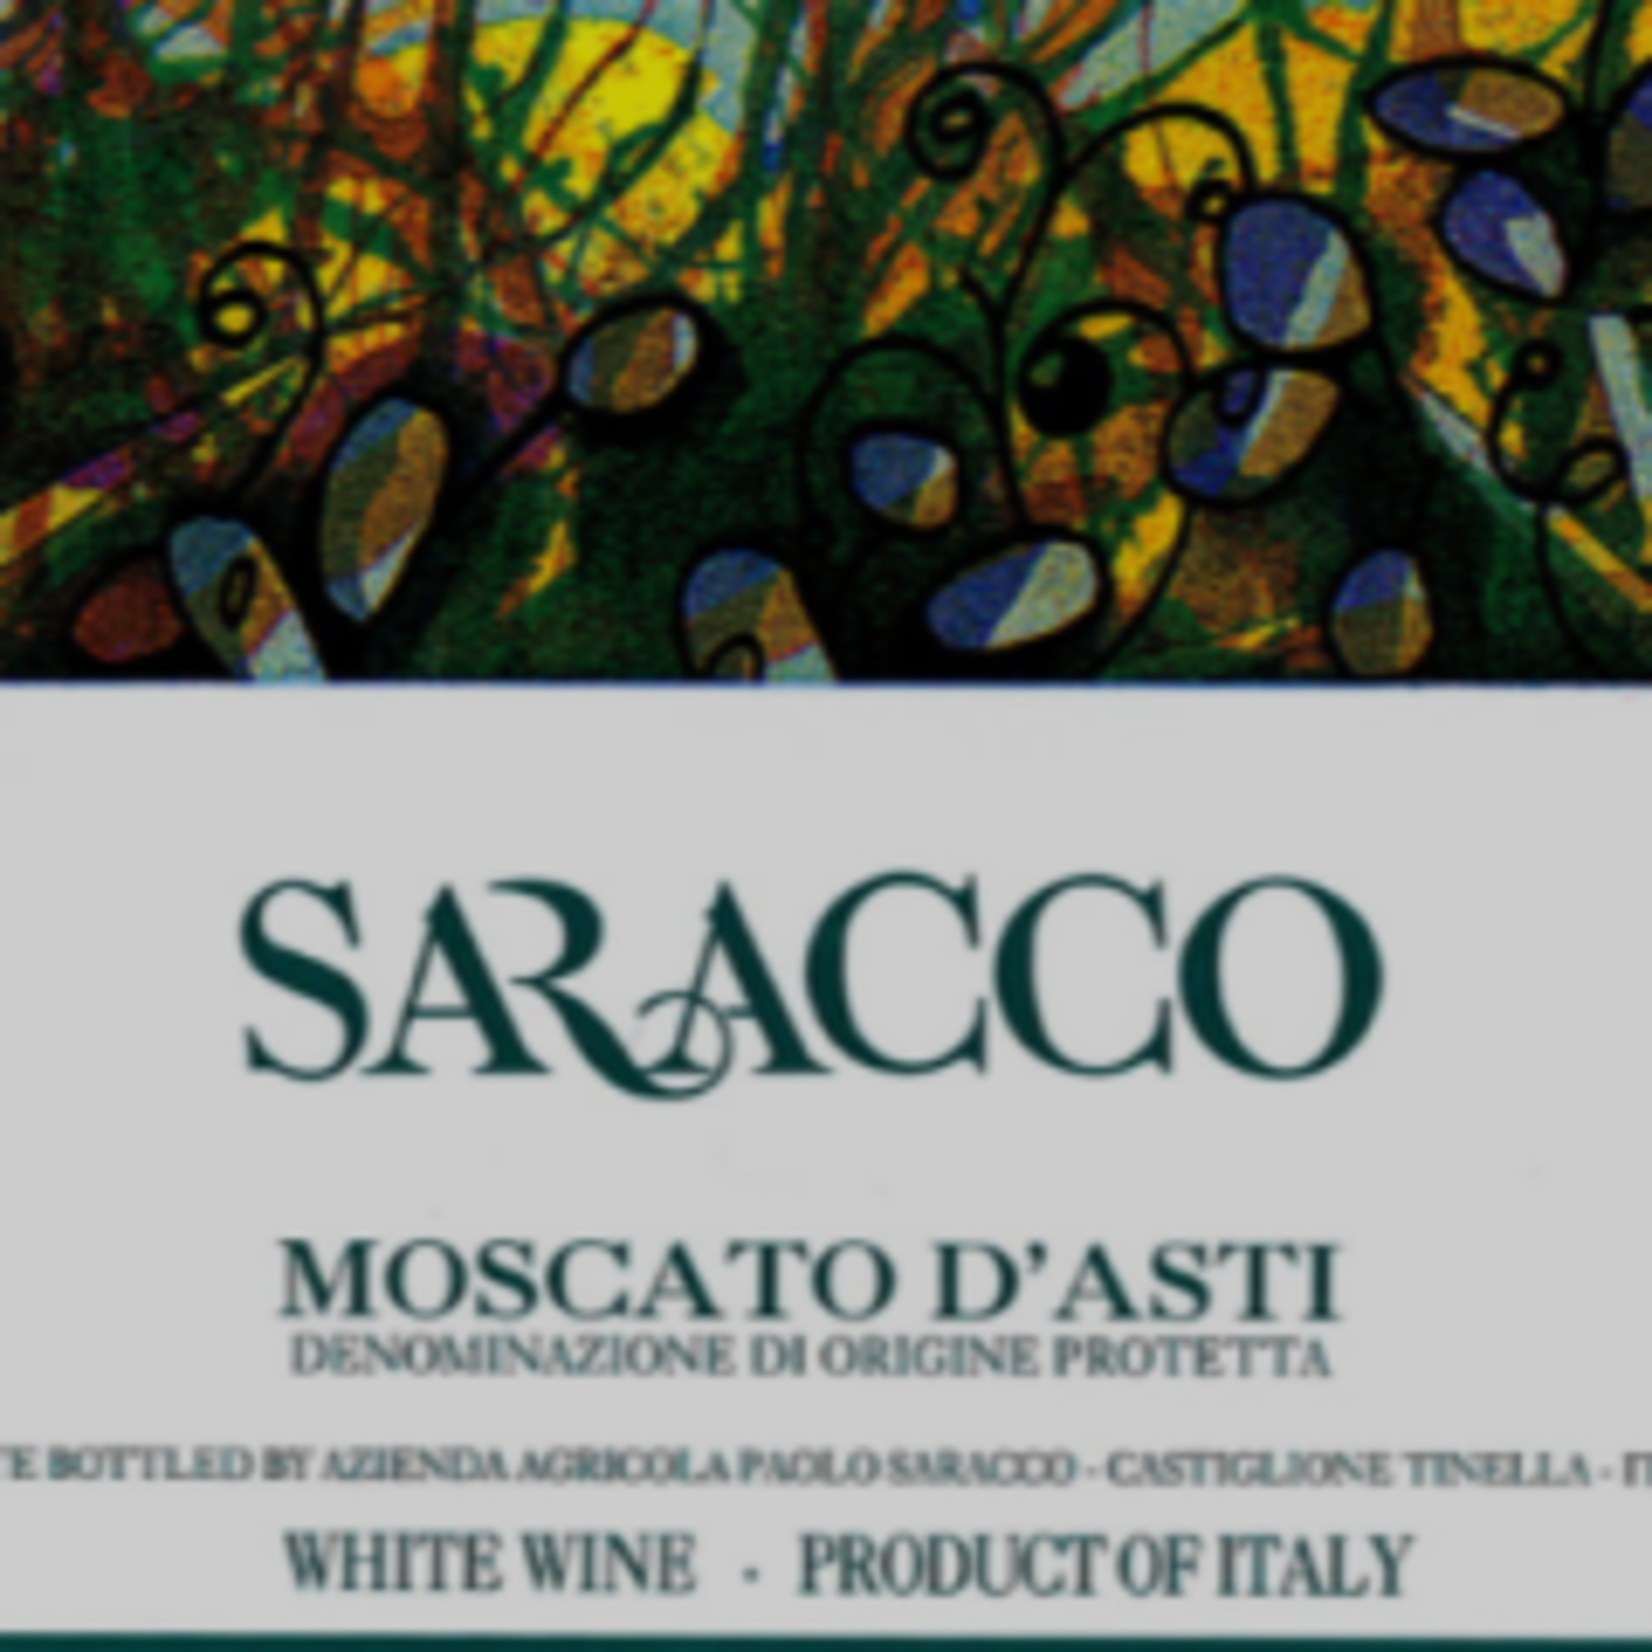 Saracco Moscato d'Asti (375 ml)